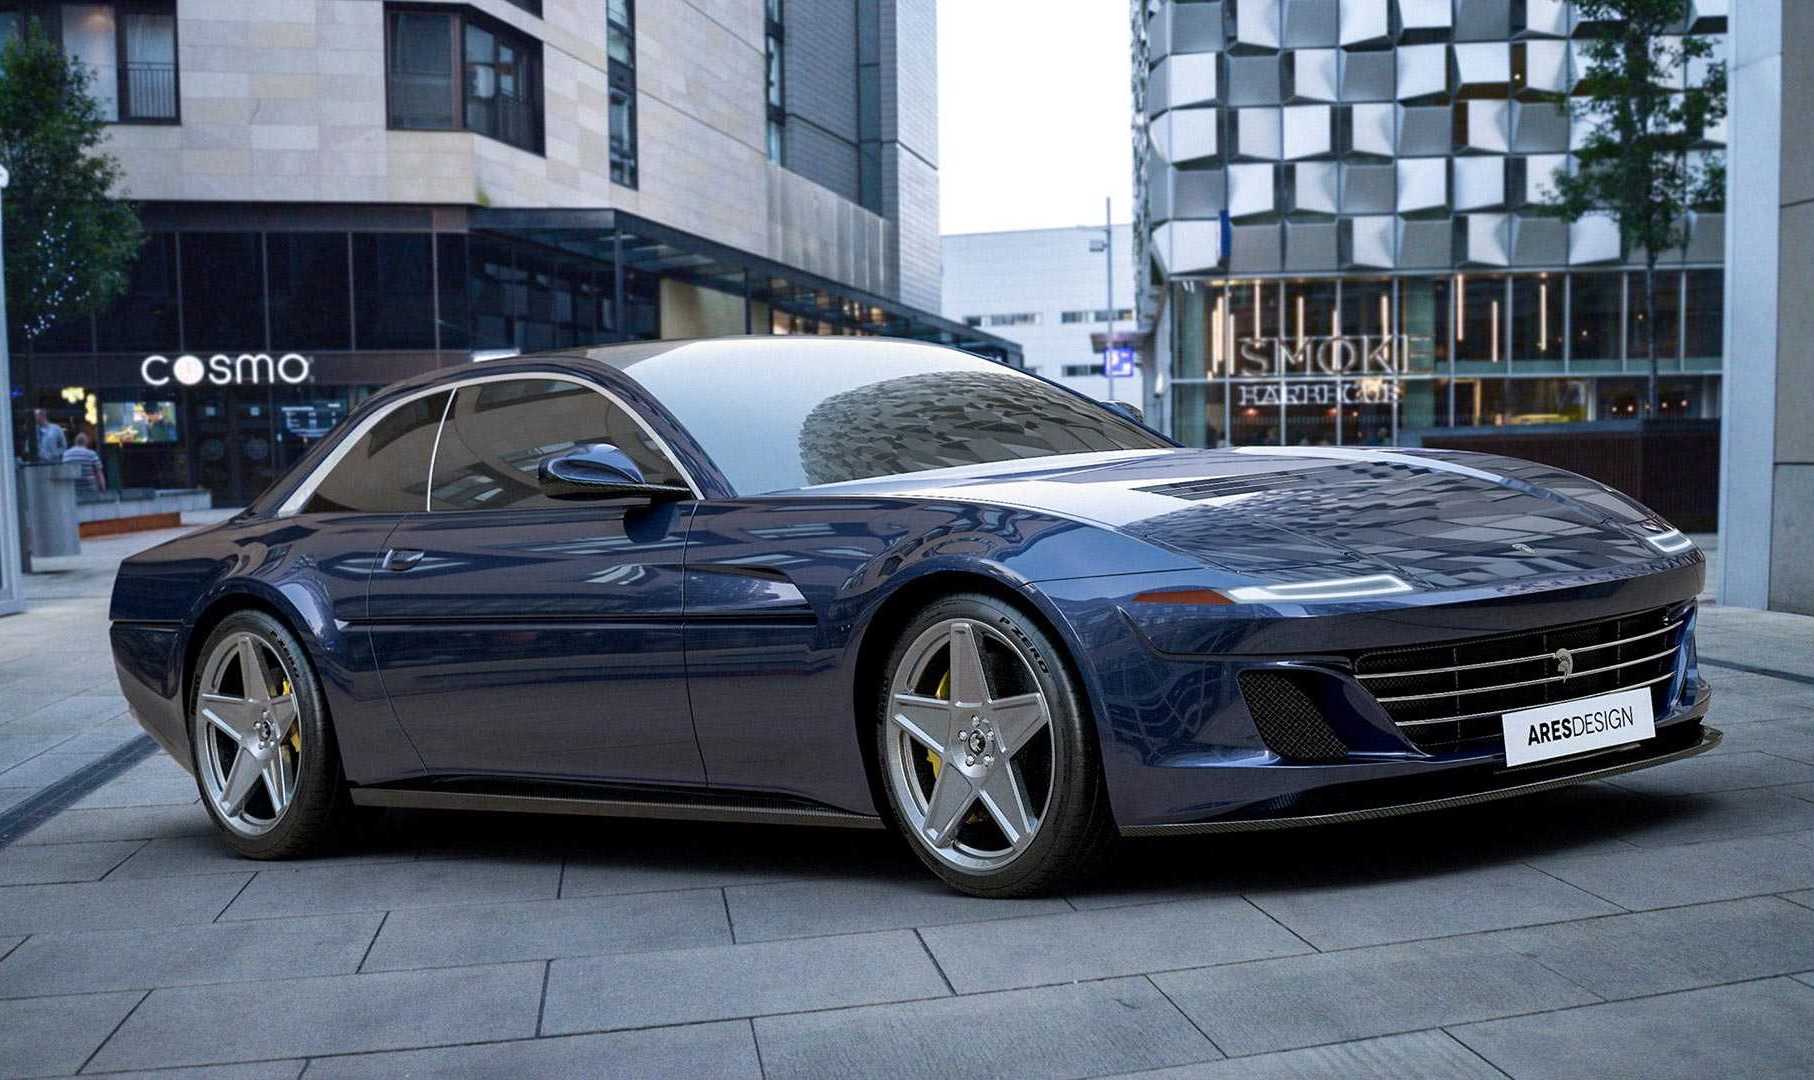 Ares Design finalises Project Pony ‘Ferrari 412’ design